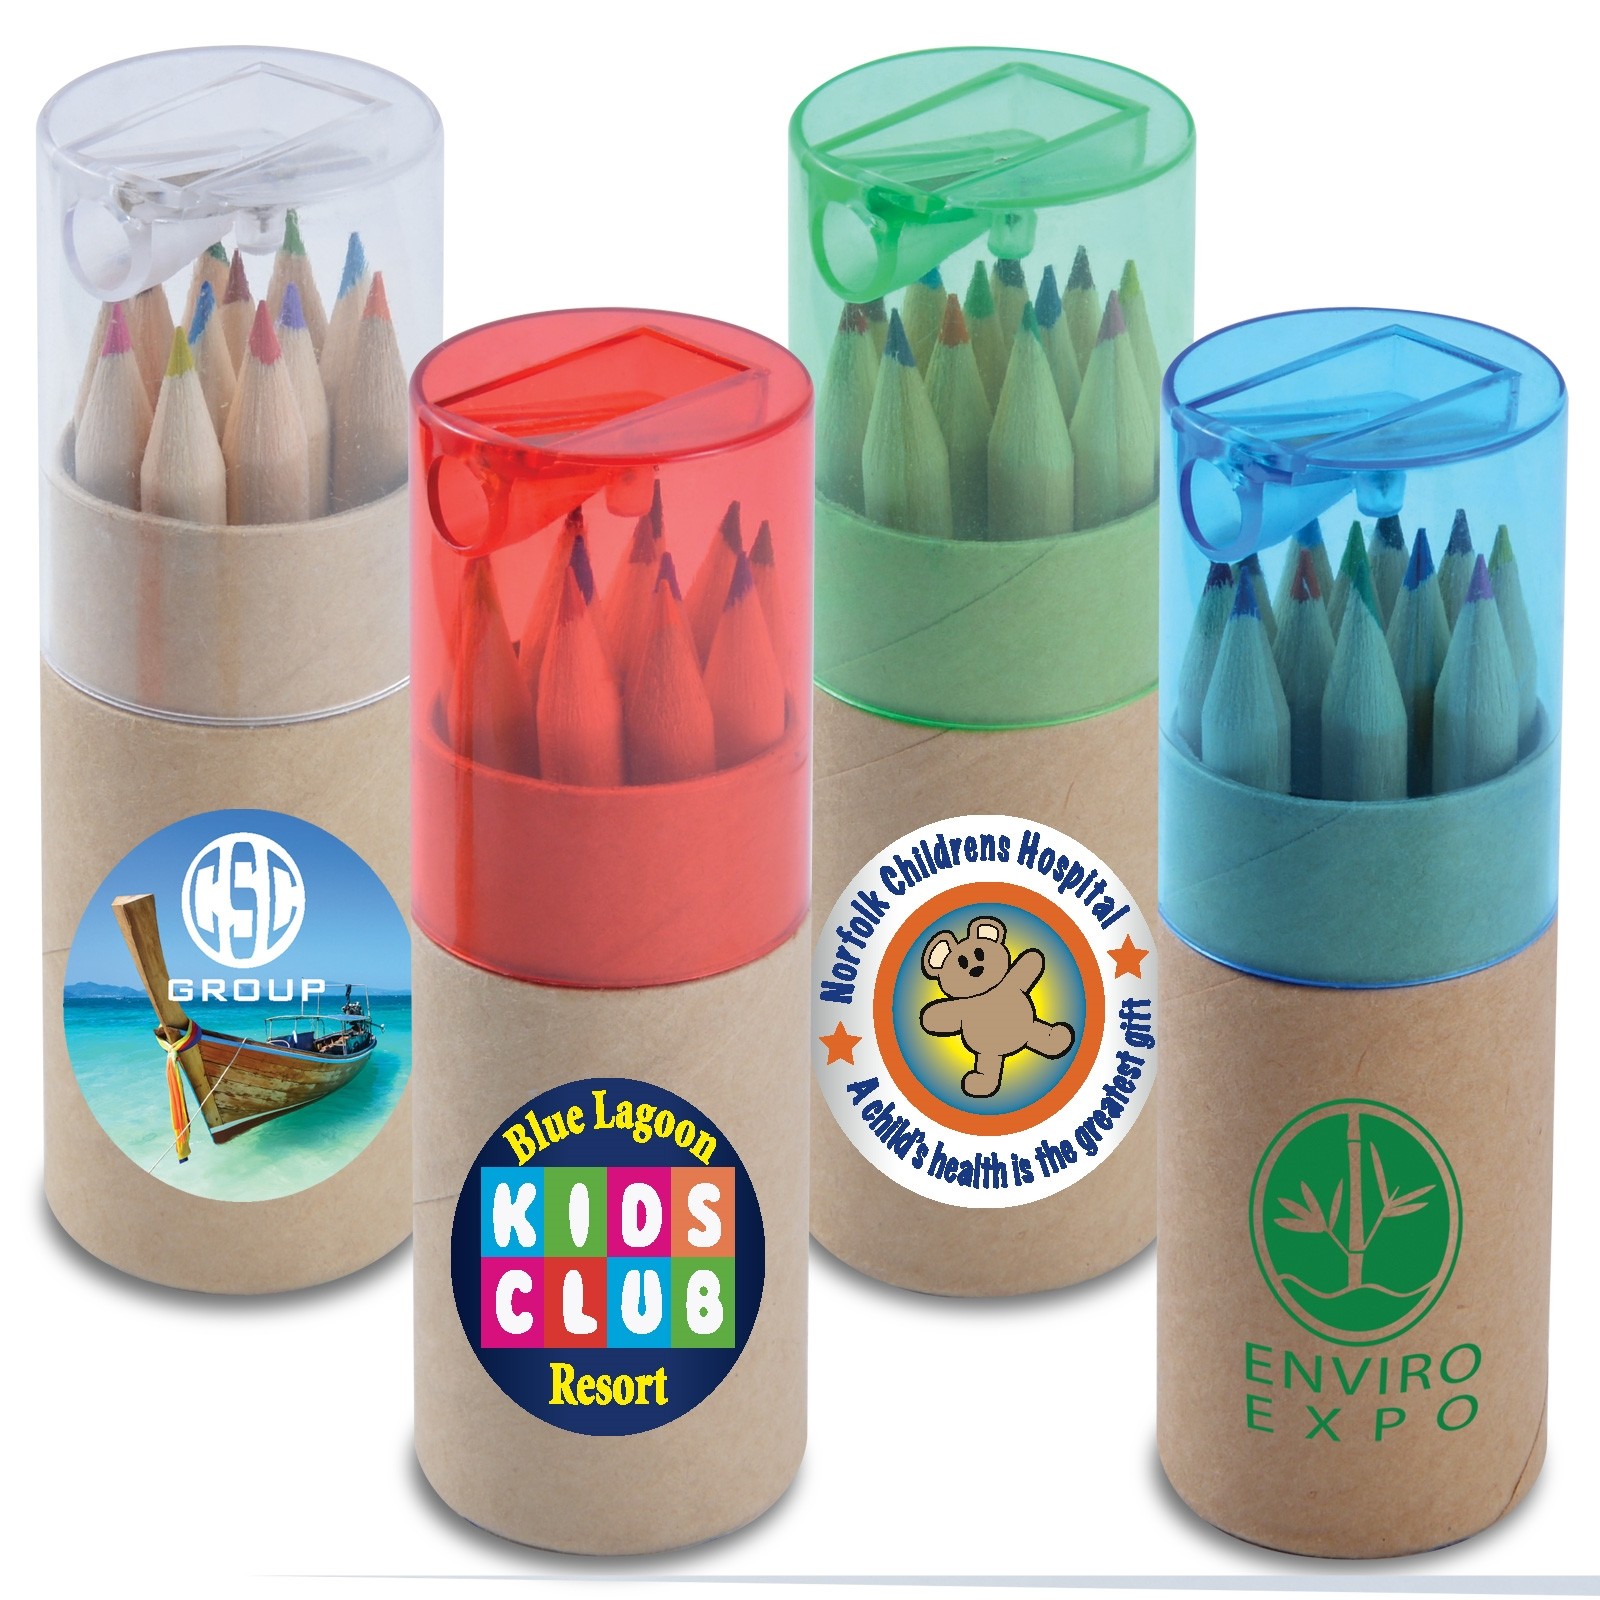 Colored Pencils in Cardboard Tube